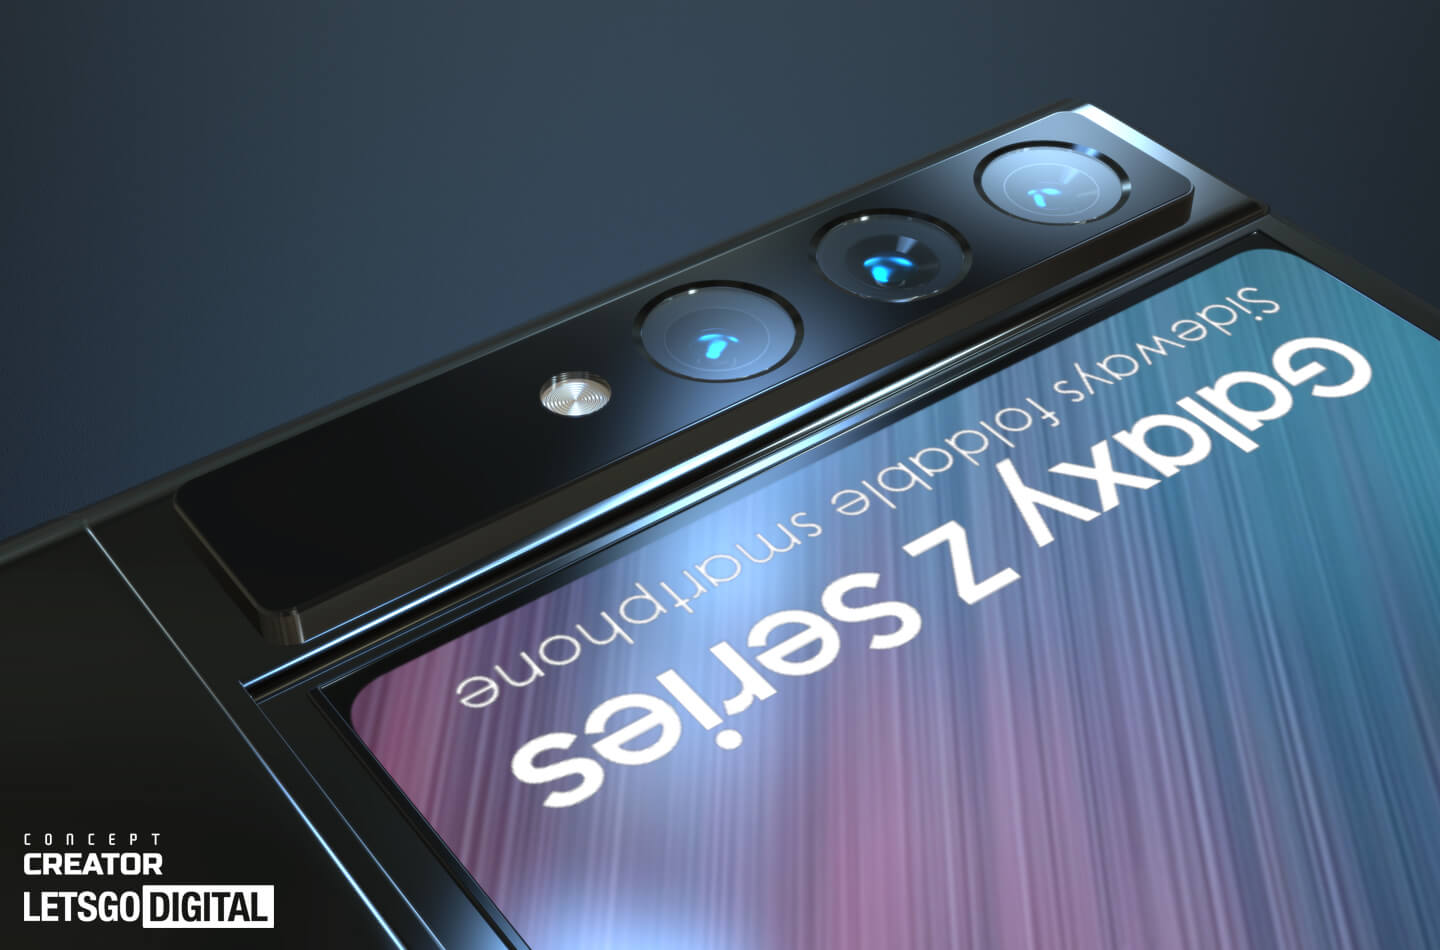 Samsung Galaxy Z series -Future of Flip smartphones
Samsung galaxy phone